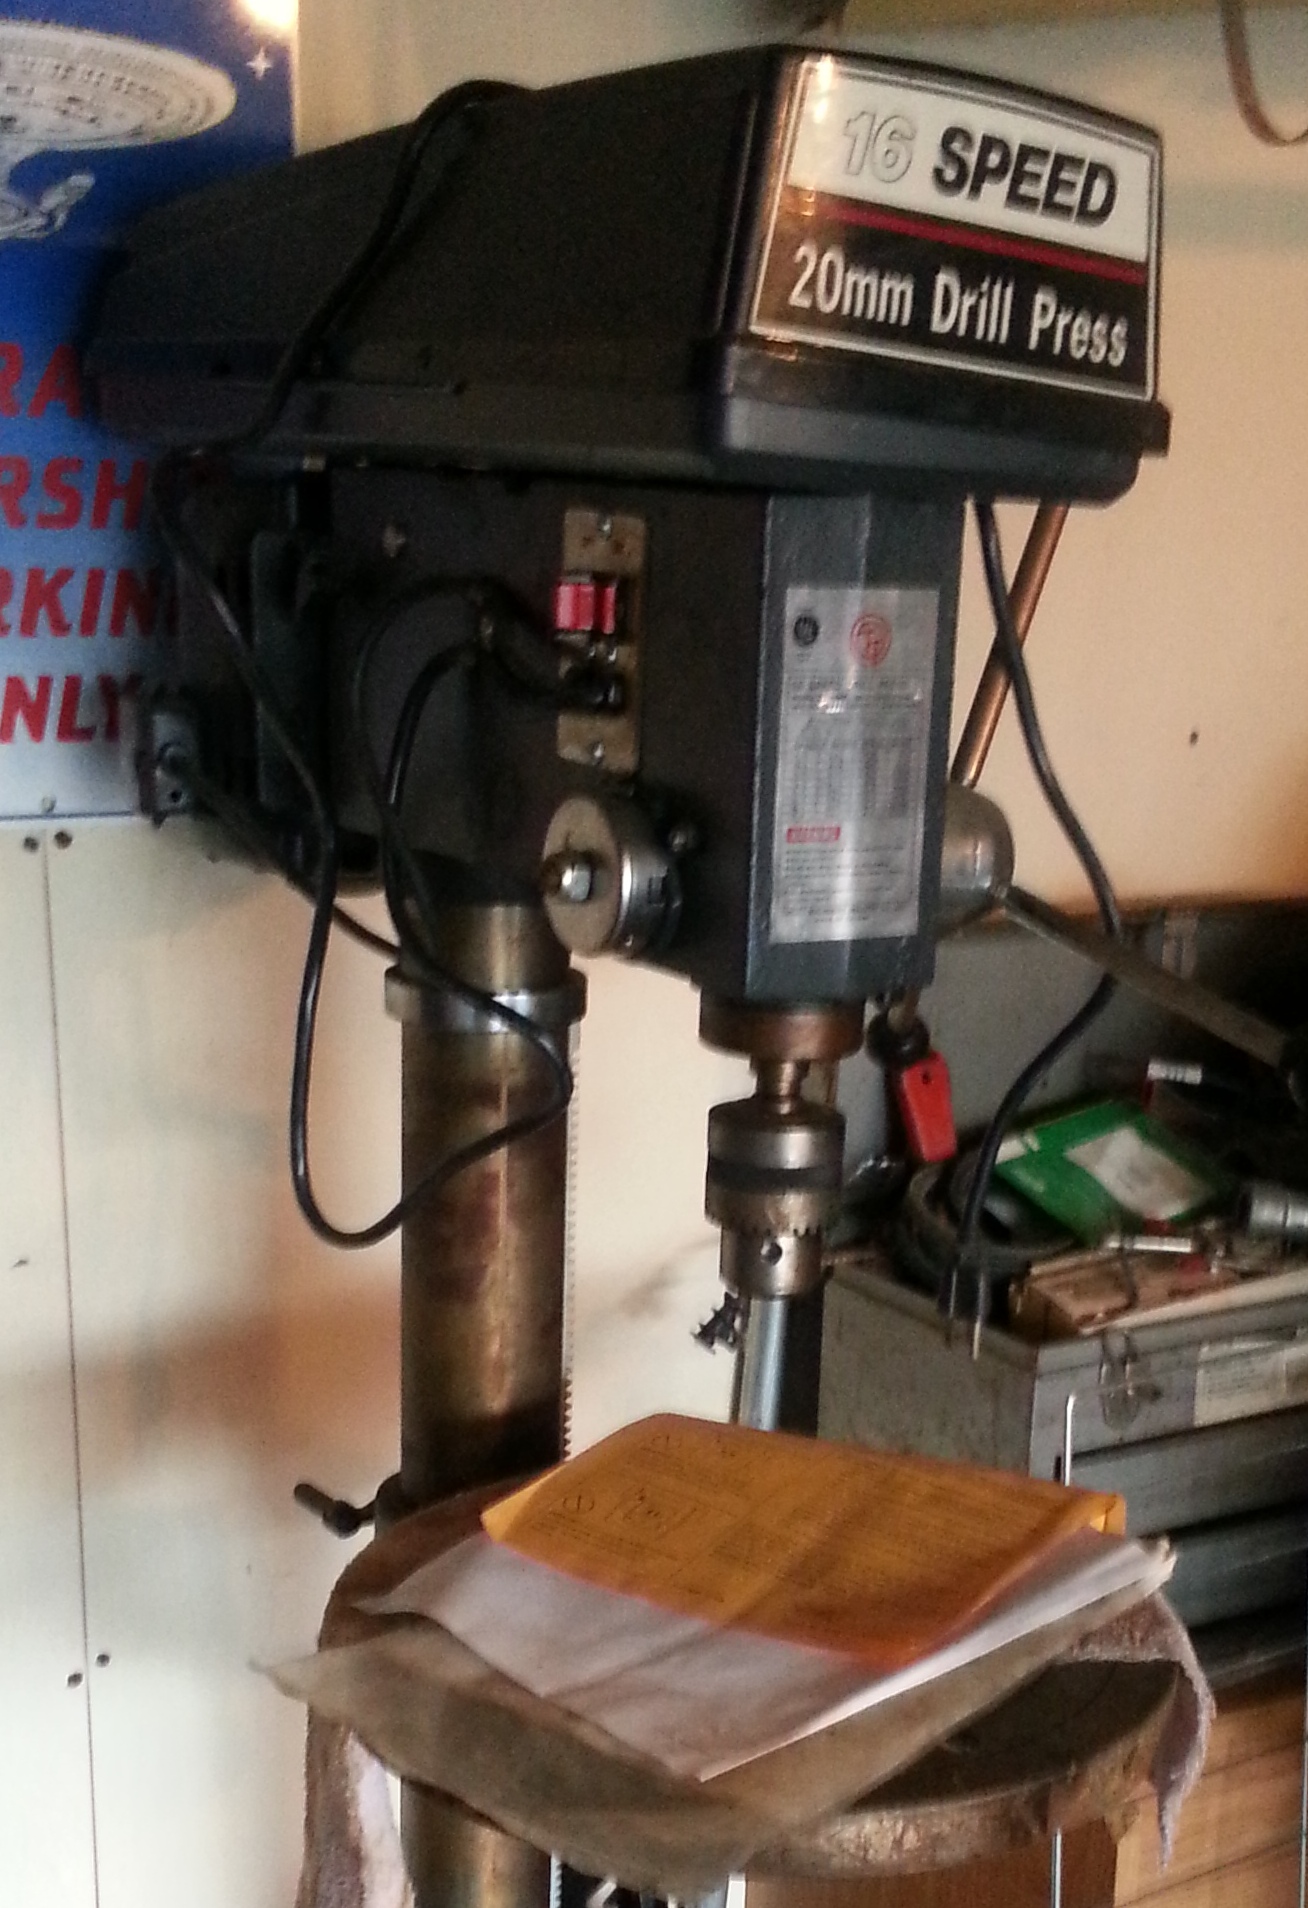 16 Speed 20mm Drill Press (Floor mount)